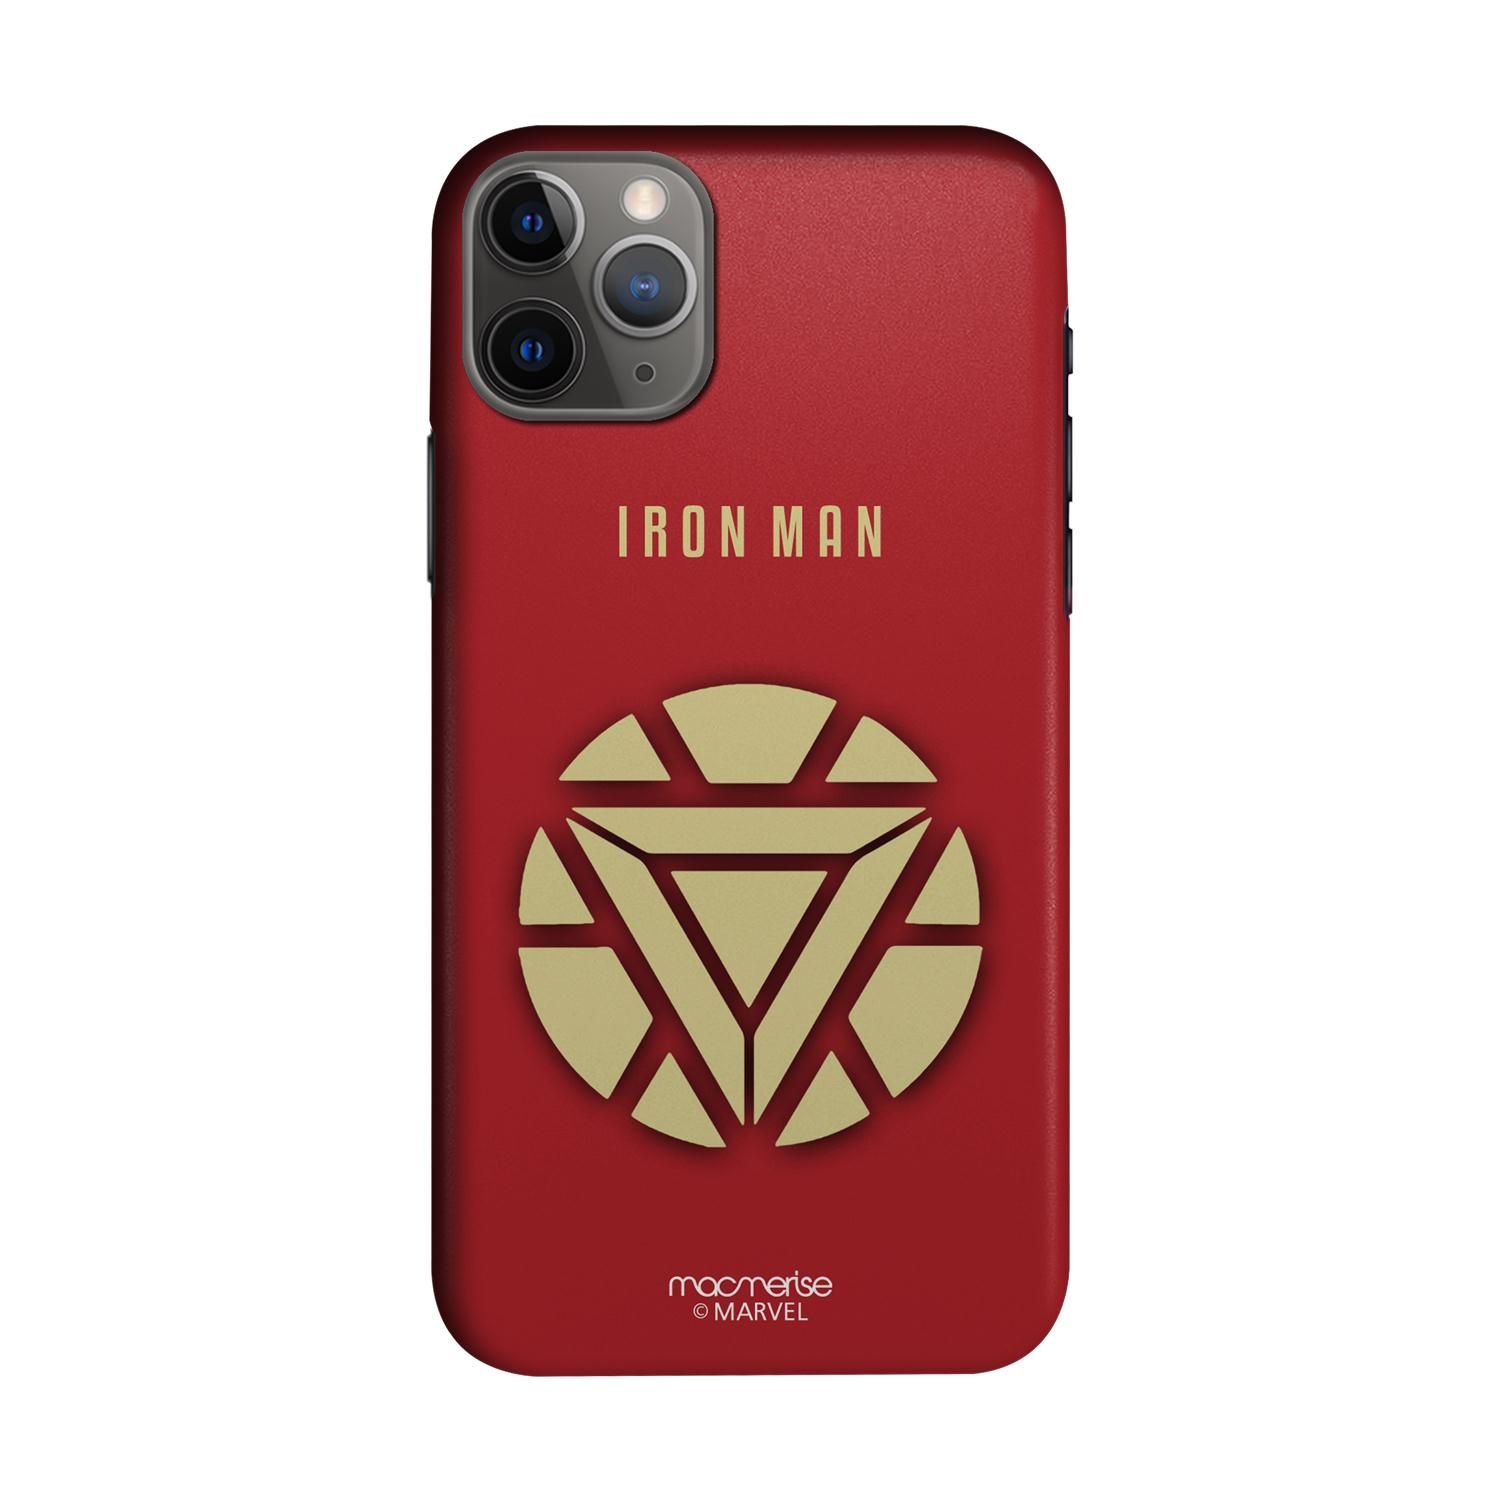 Minimalistic Ironman - Sleek Phone Case for iPhone 11 Pro Max